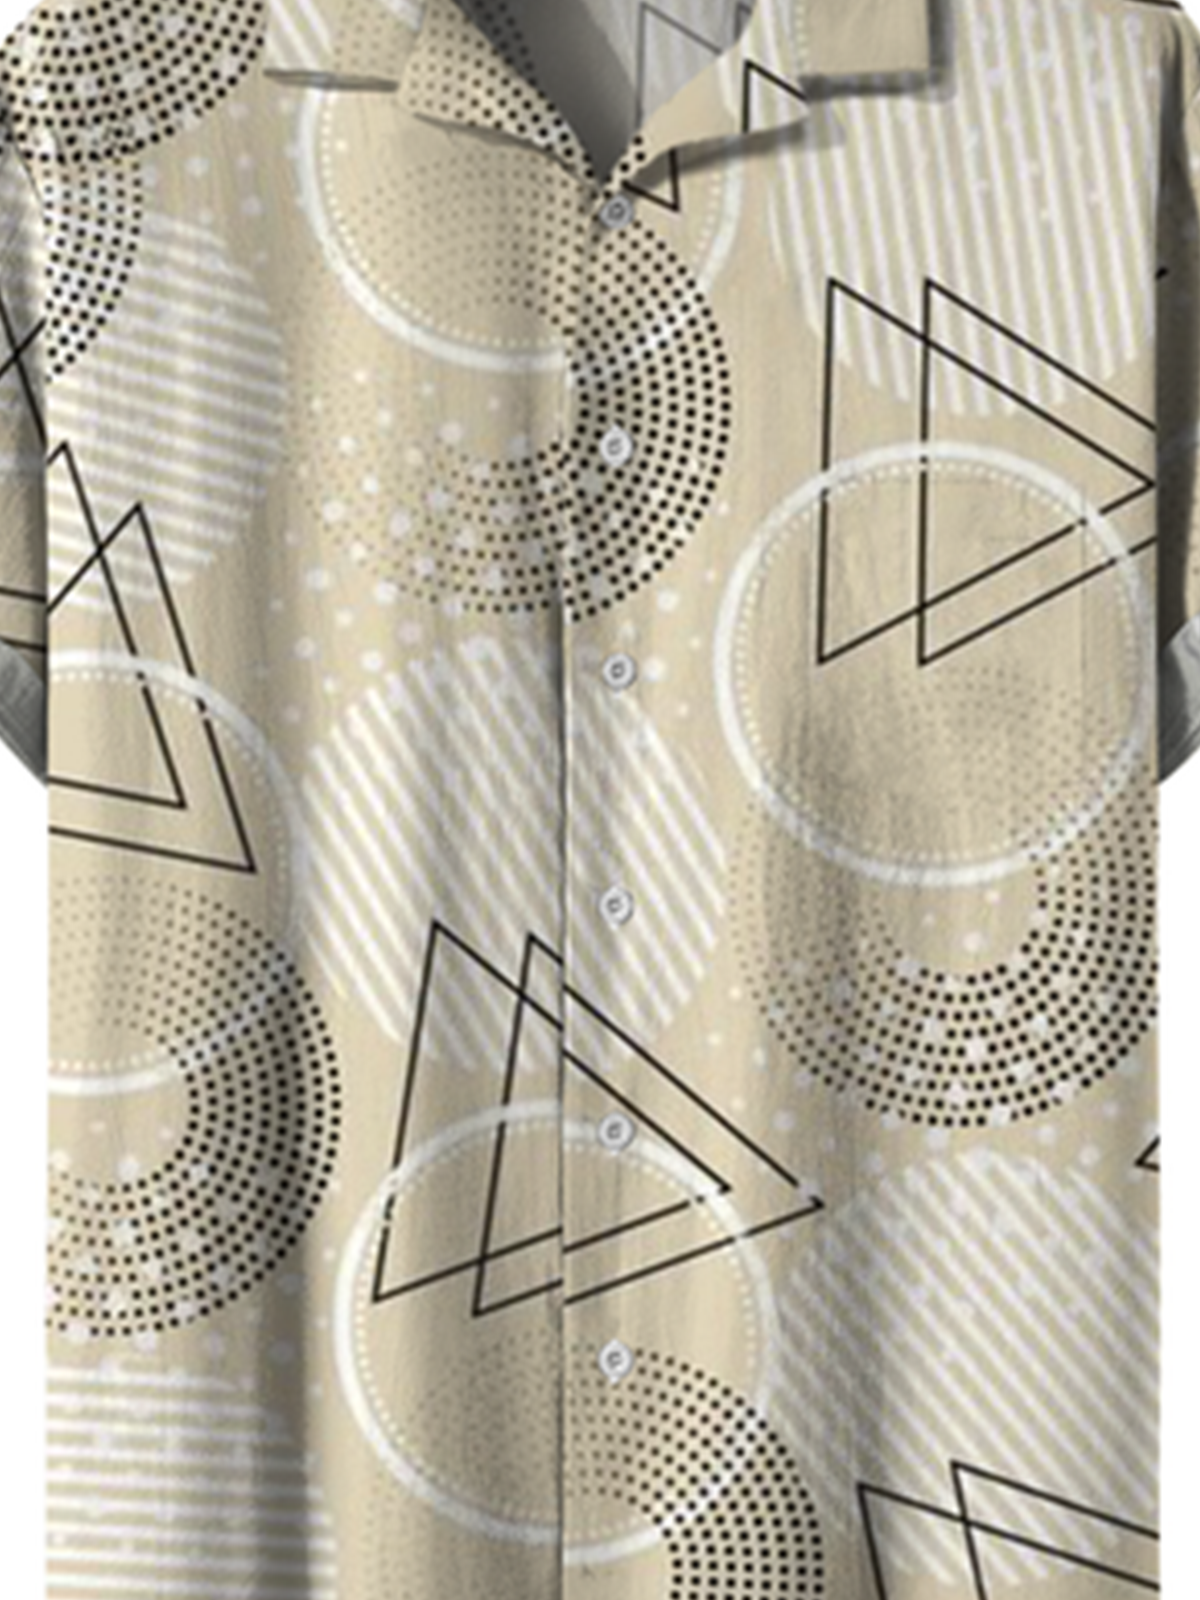 Cotton and linen style geometric striped linen shirt